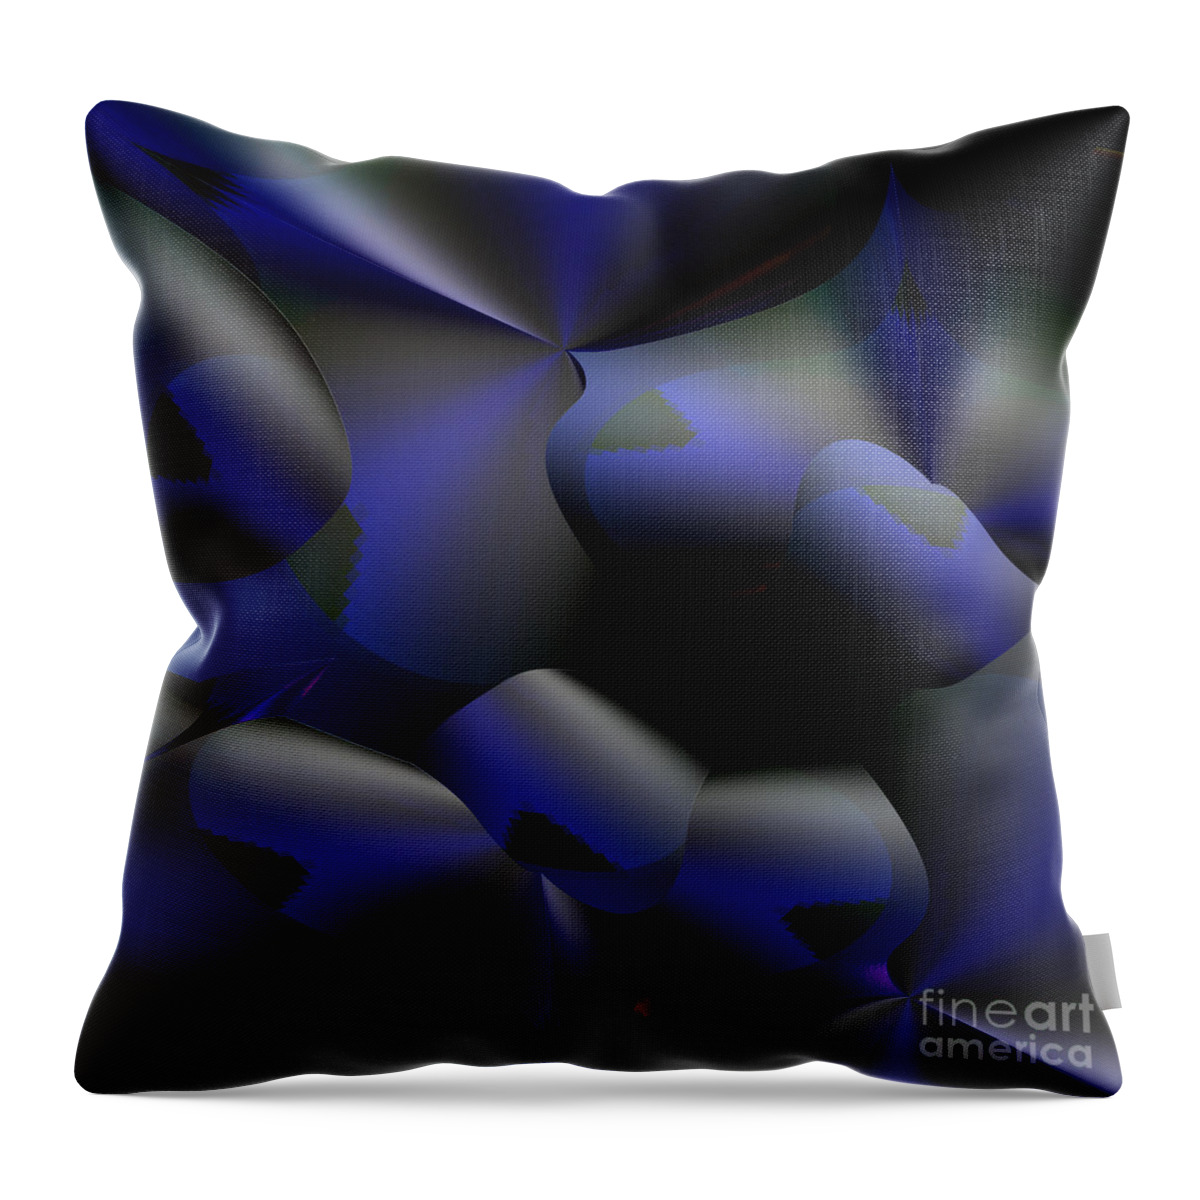  Throw Pillow featuring the digital art Drifting Off by jammer by First Star Art